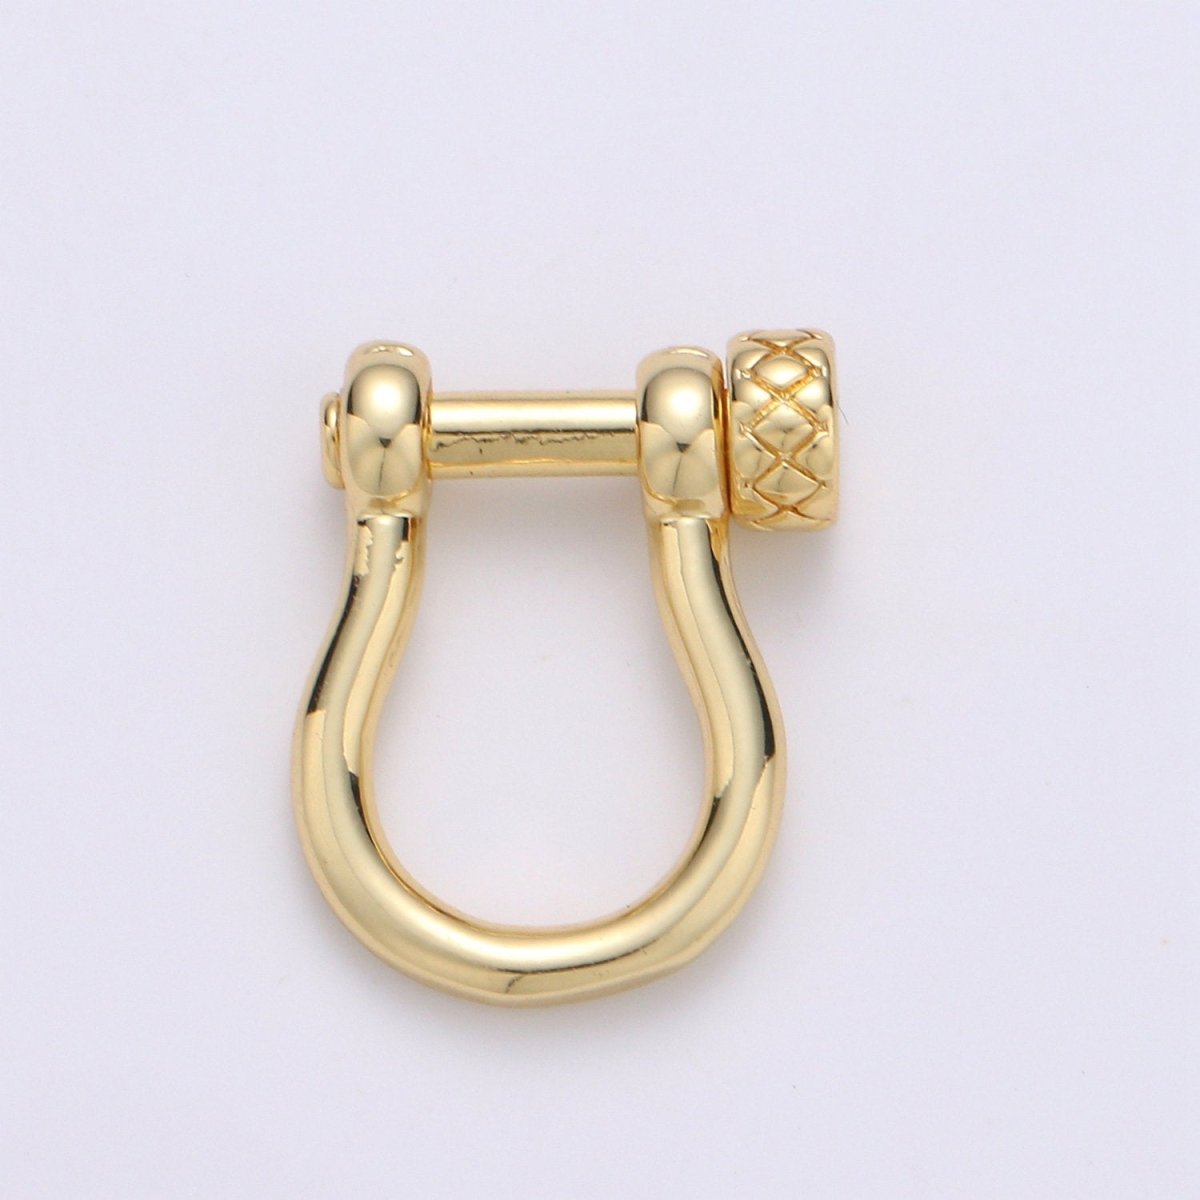 Gold Filled Screw clasp lock, Anchor Shackle, Gold, Silver, Rose gold Black Bracelet Clasps, Anchor Necklace, Sailor Bracelet Clasp Supply K-712 - K-715 - DLUXCA